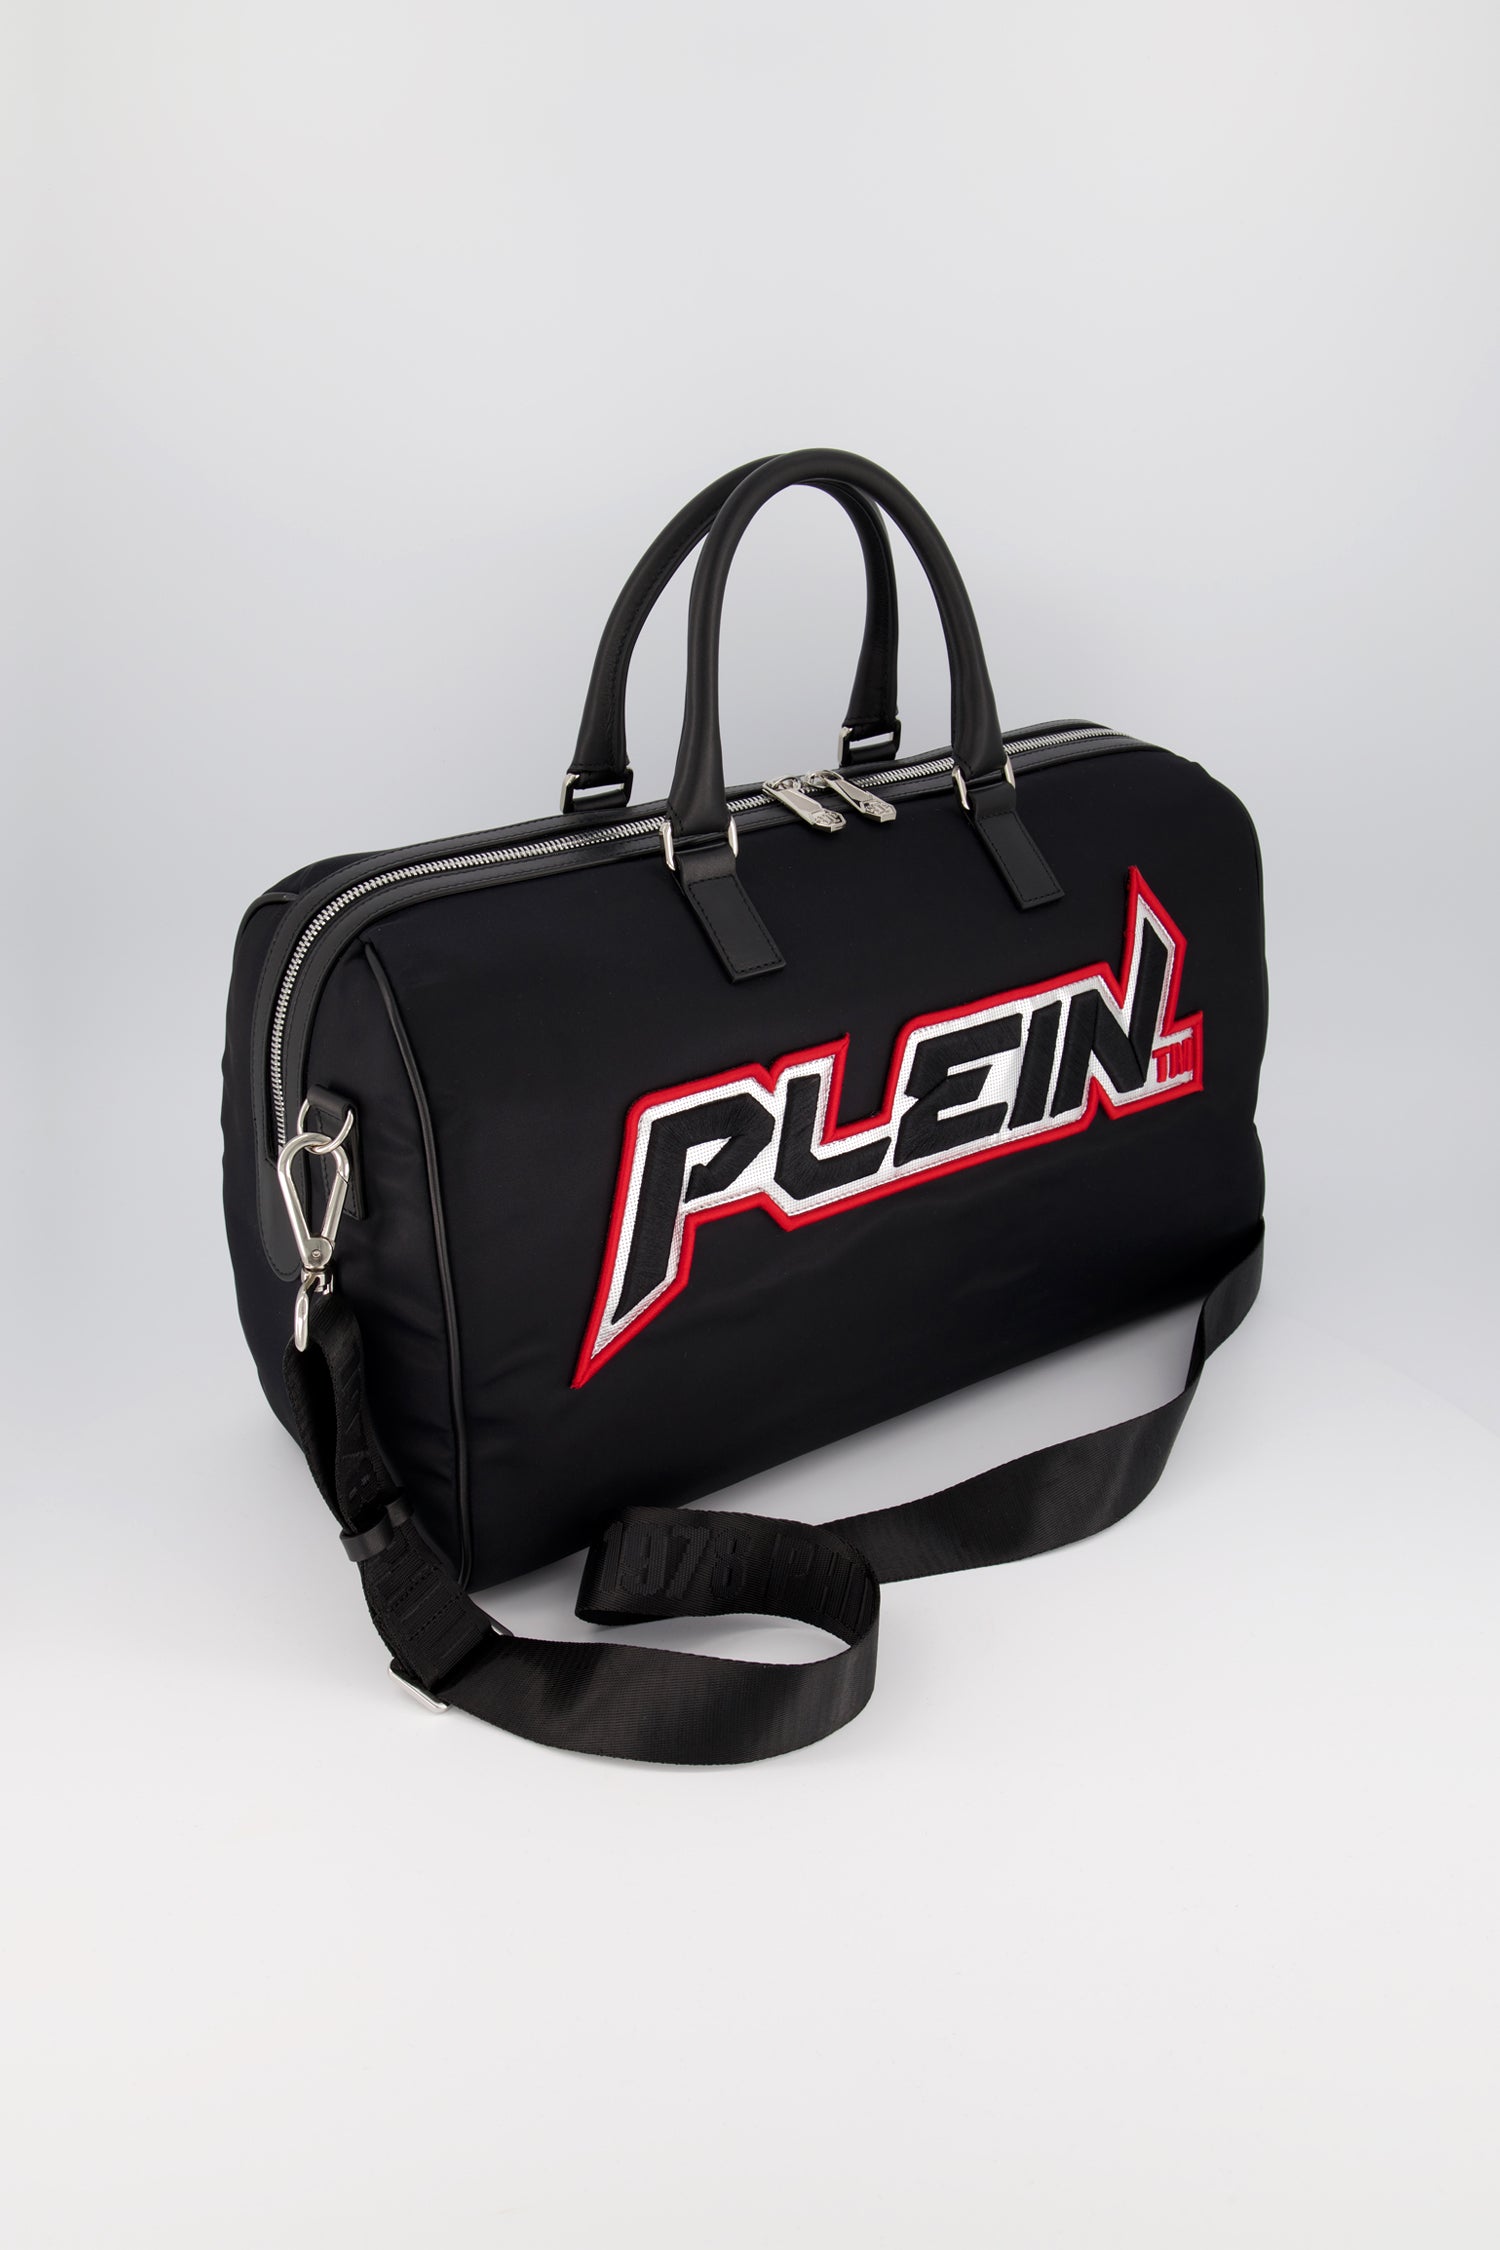 Philipp Plein Black Plein Space Travel Bag